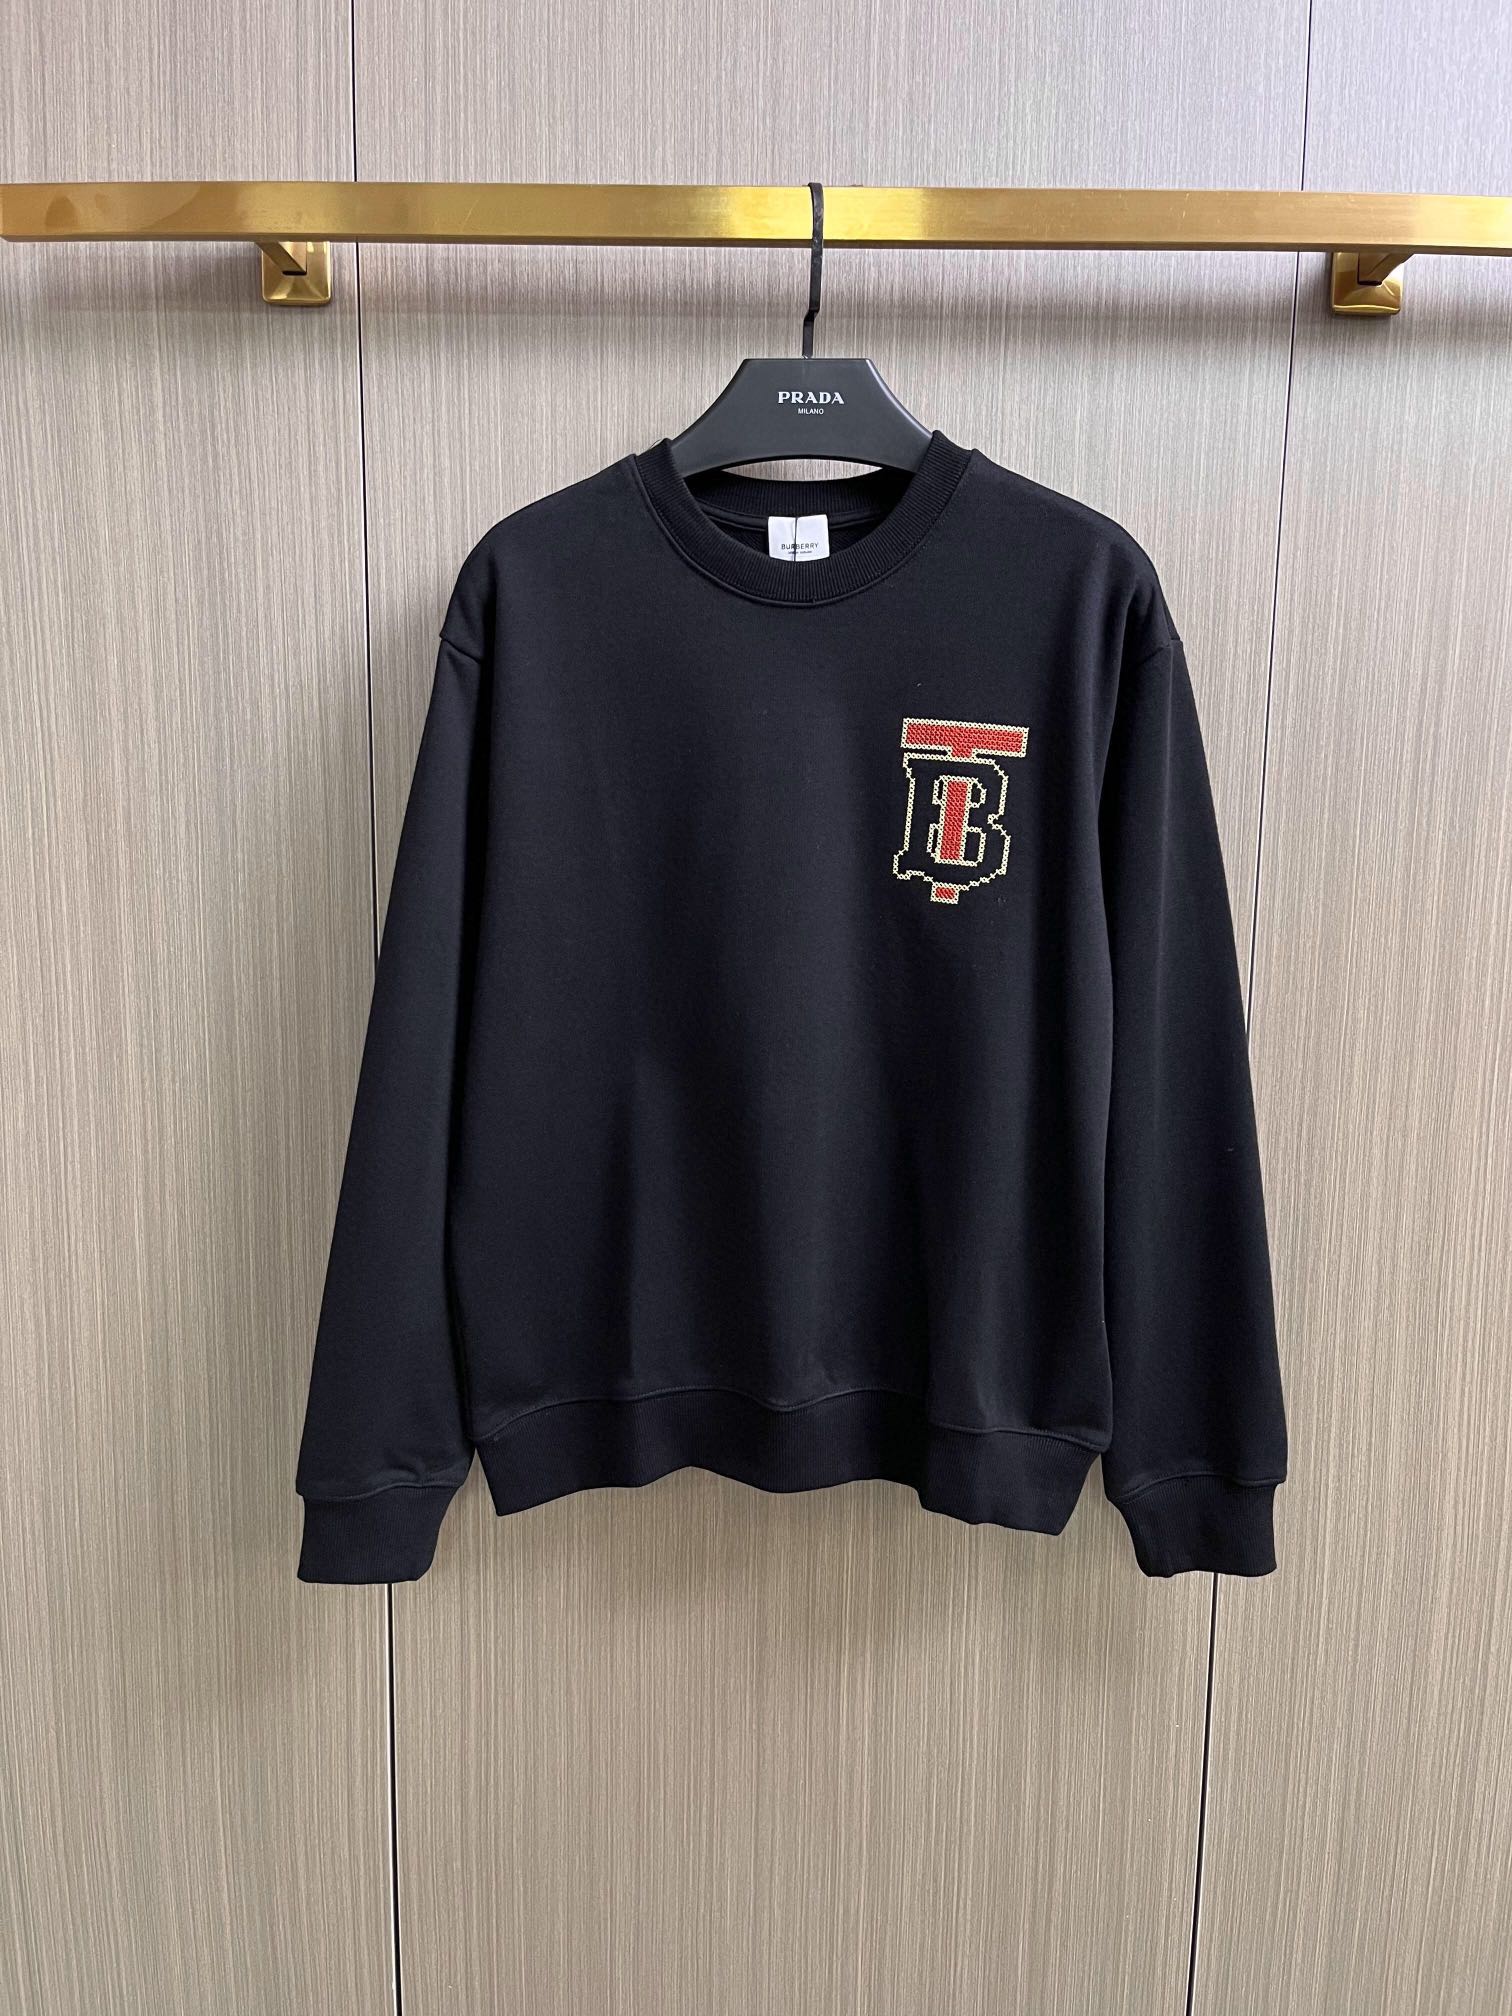 Fake High Quality Burberry Clothing Sweatshirts Embroidery Unisex